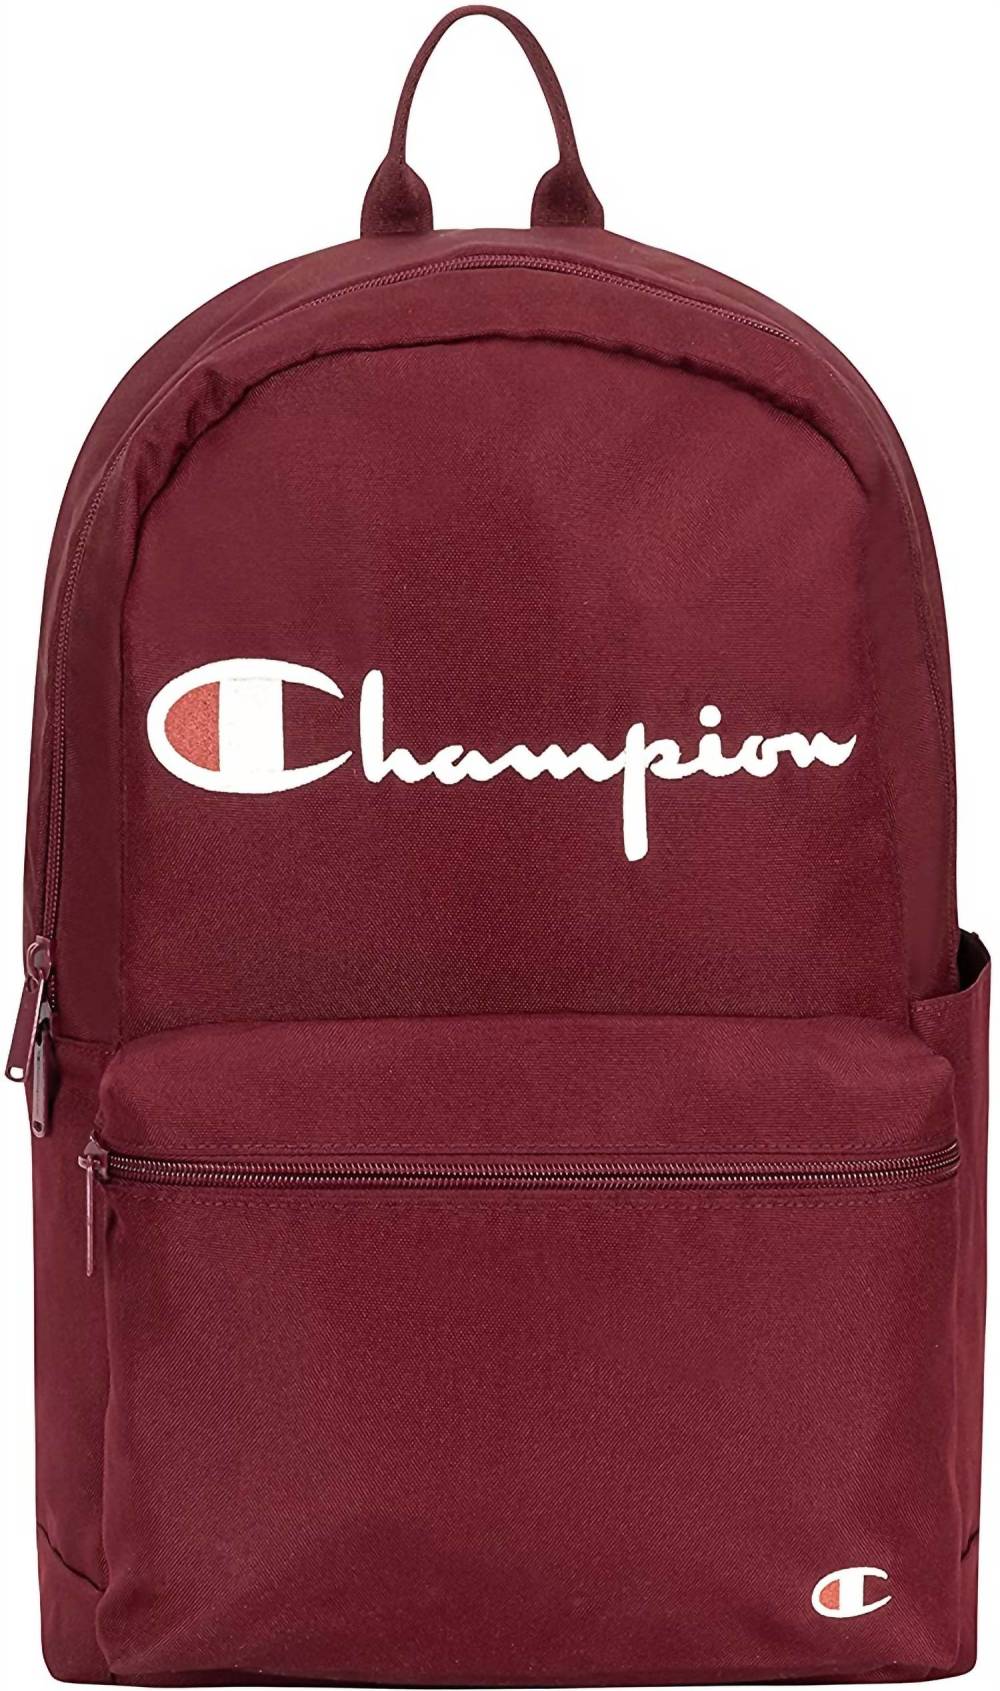 Champion - Unisex - Adult Backpack - Penningtons